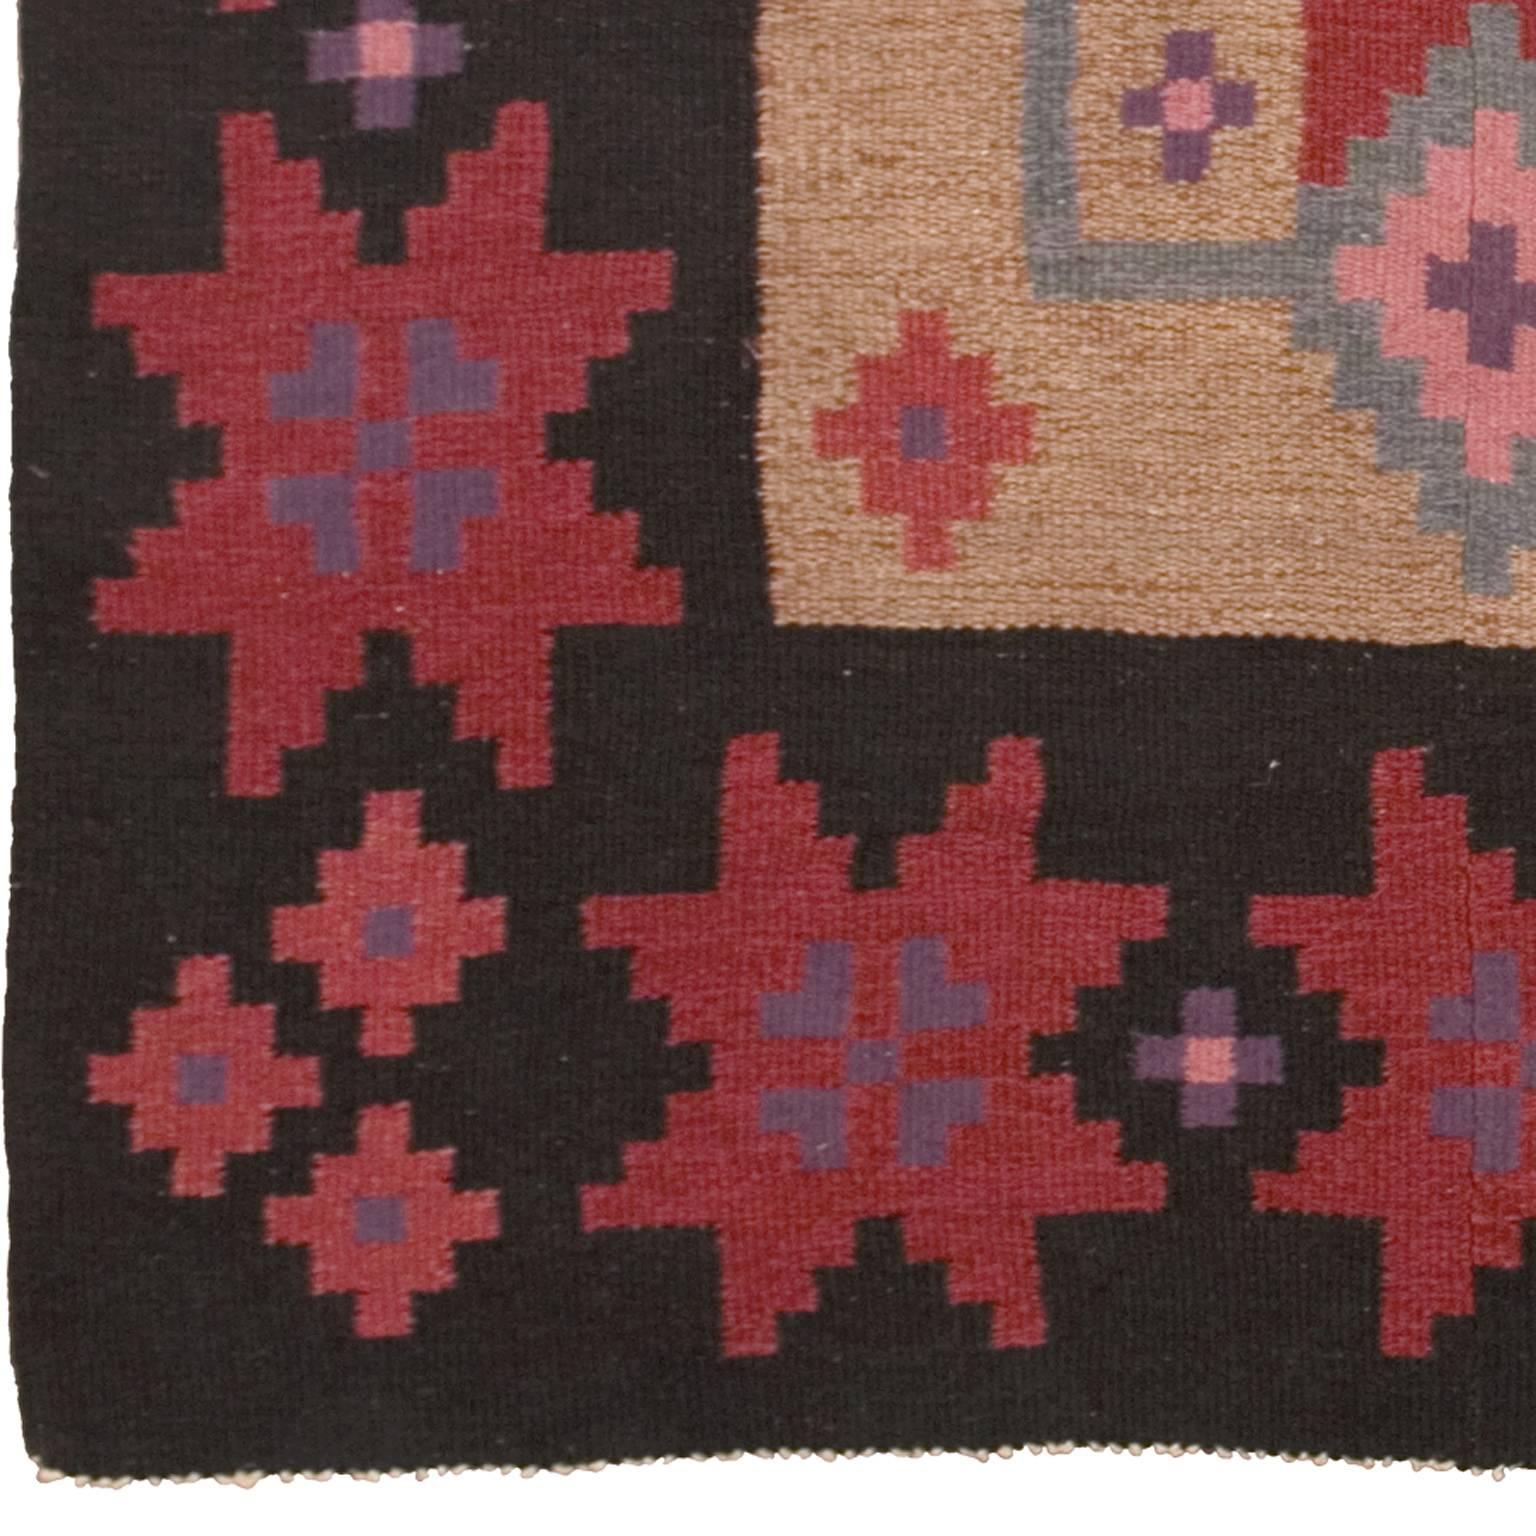 20th century Swedish flat-weave carpet.